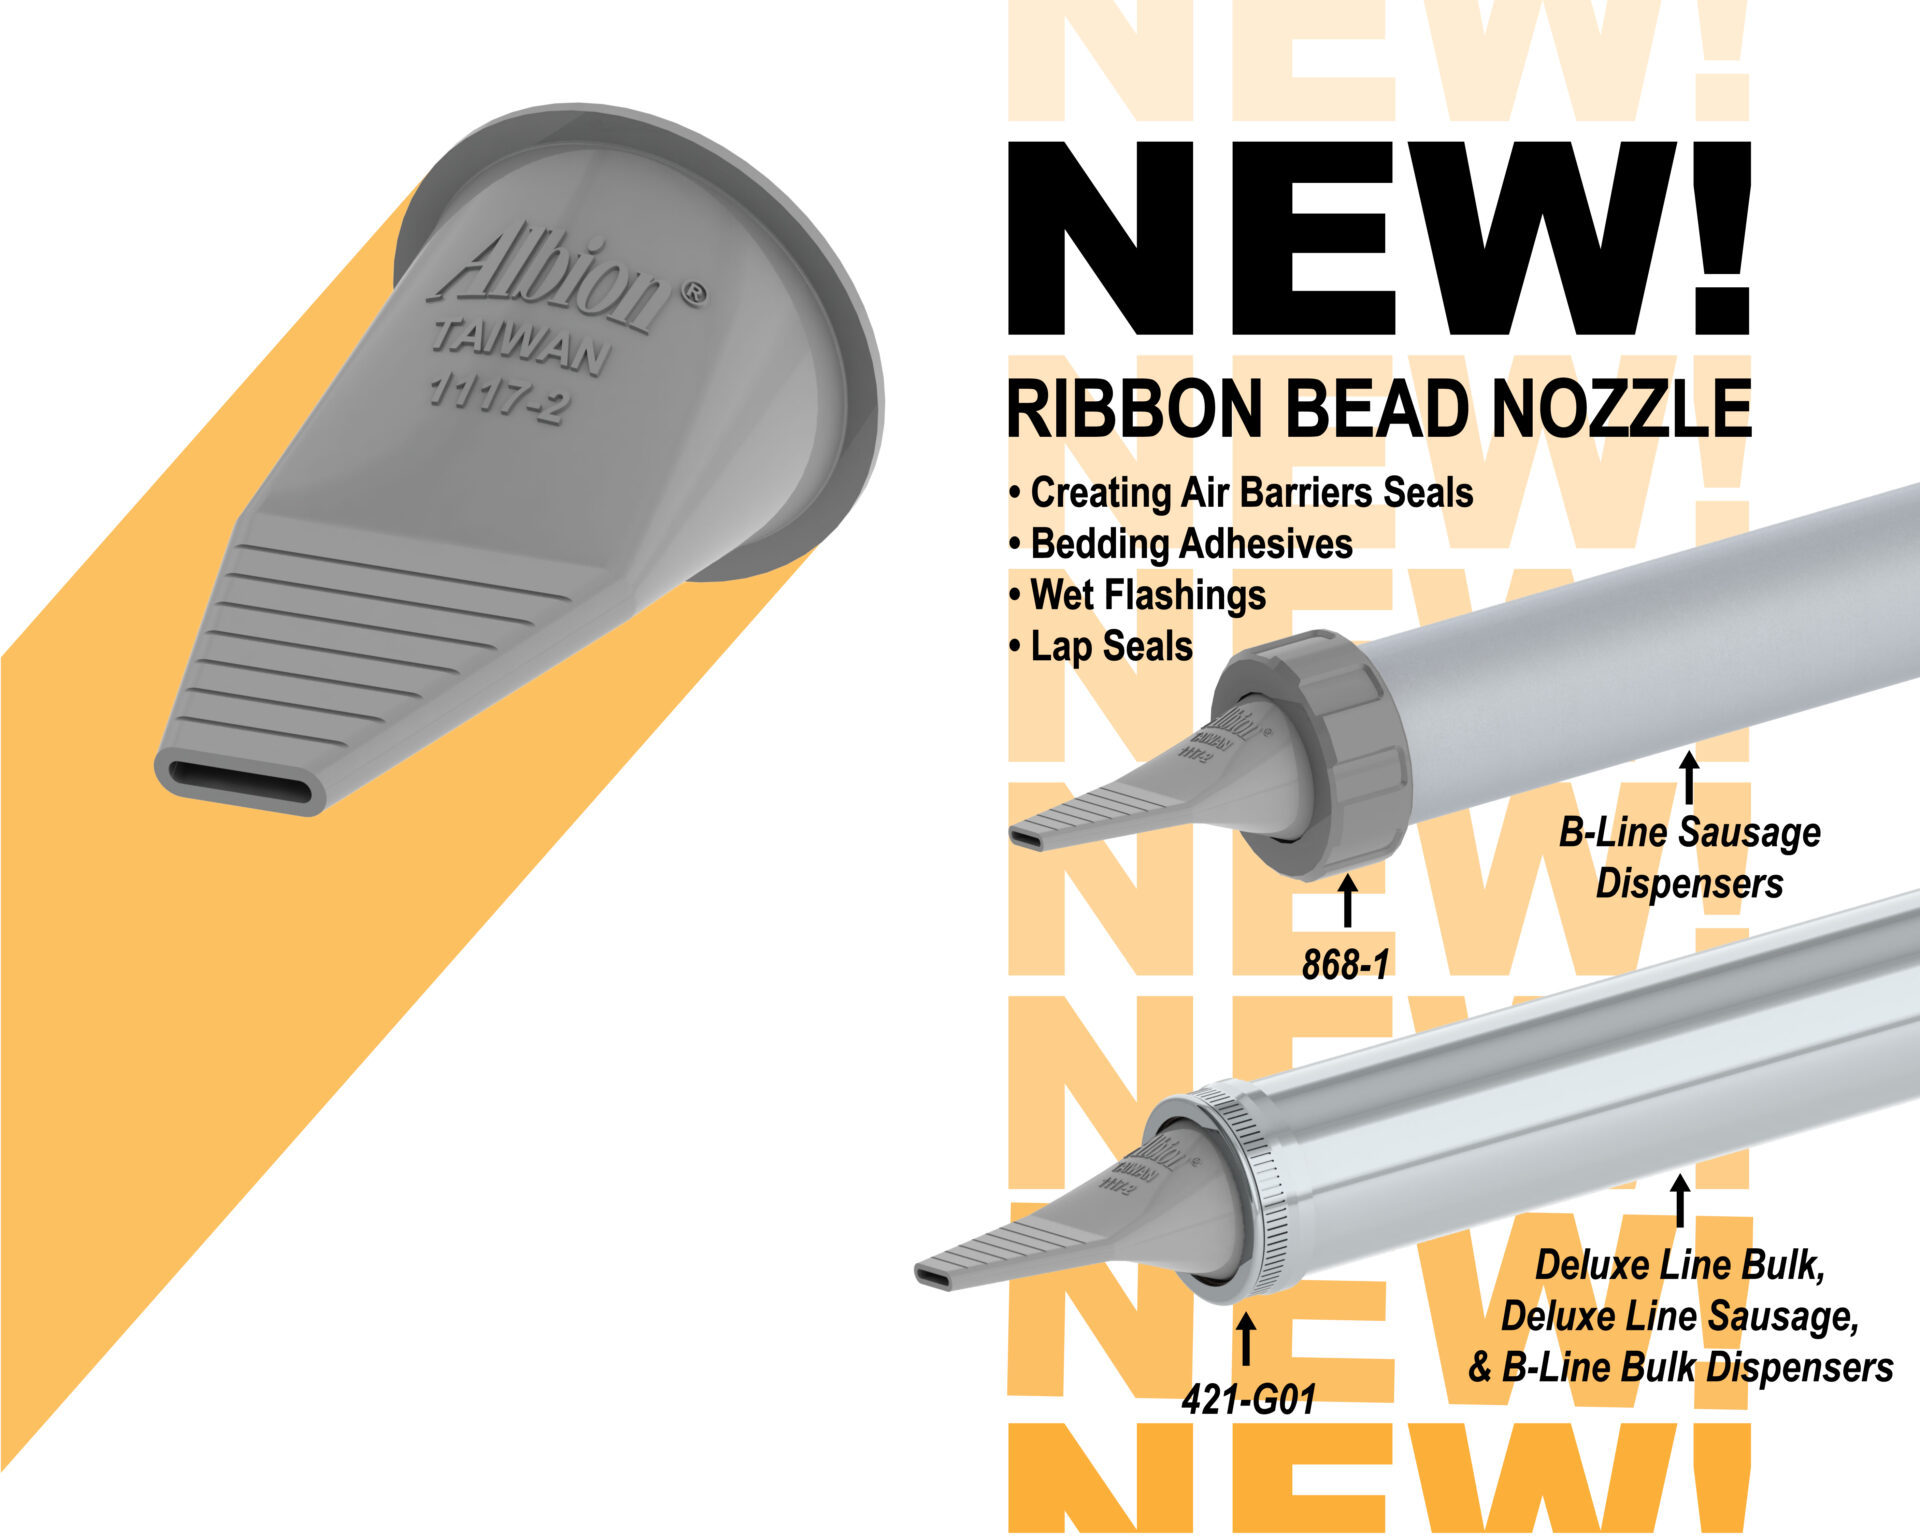 Albion Engineering's New Ribbon Nozzle